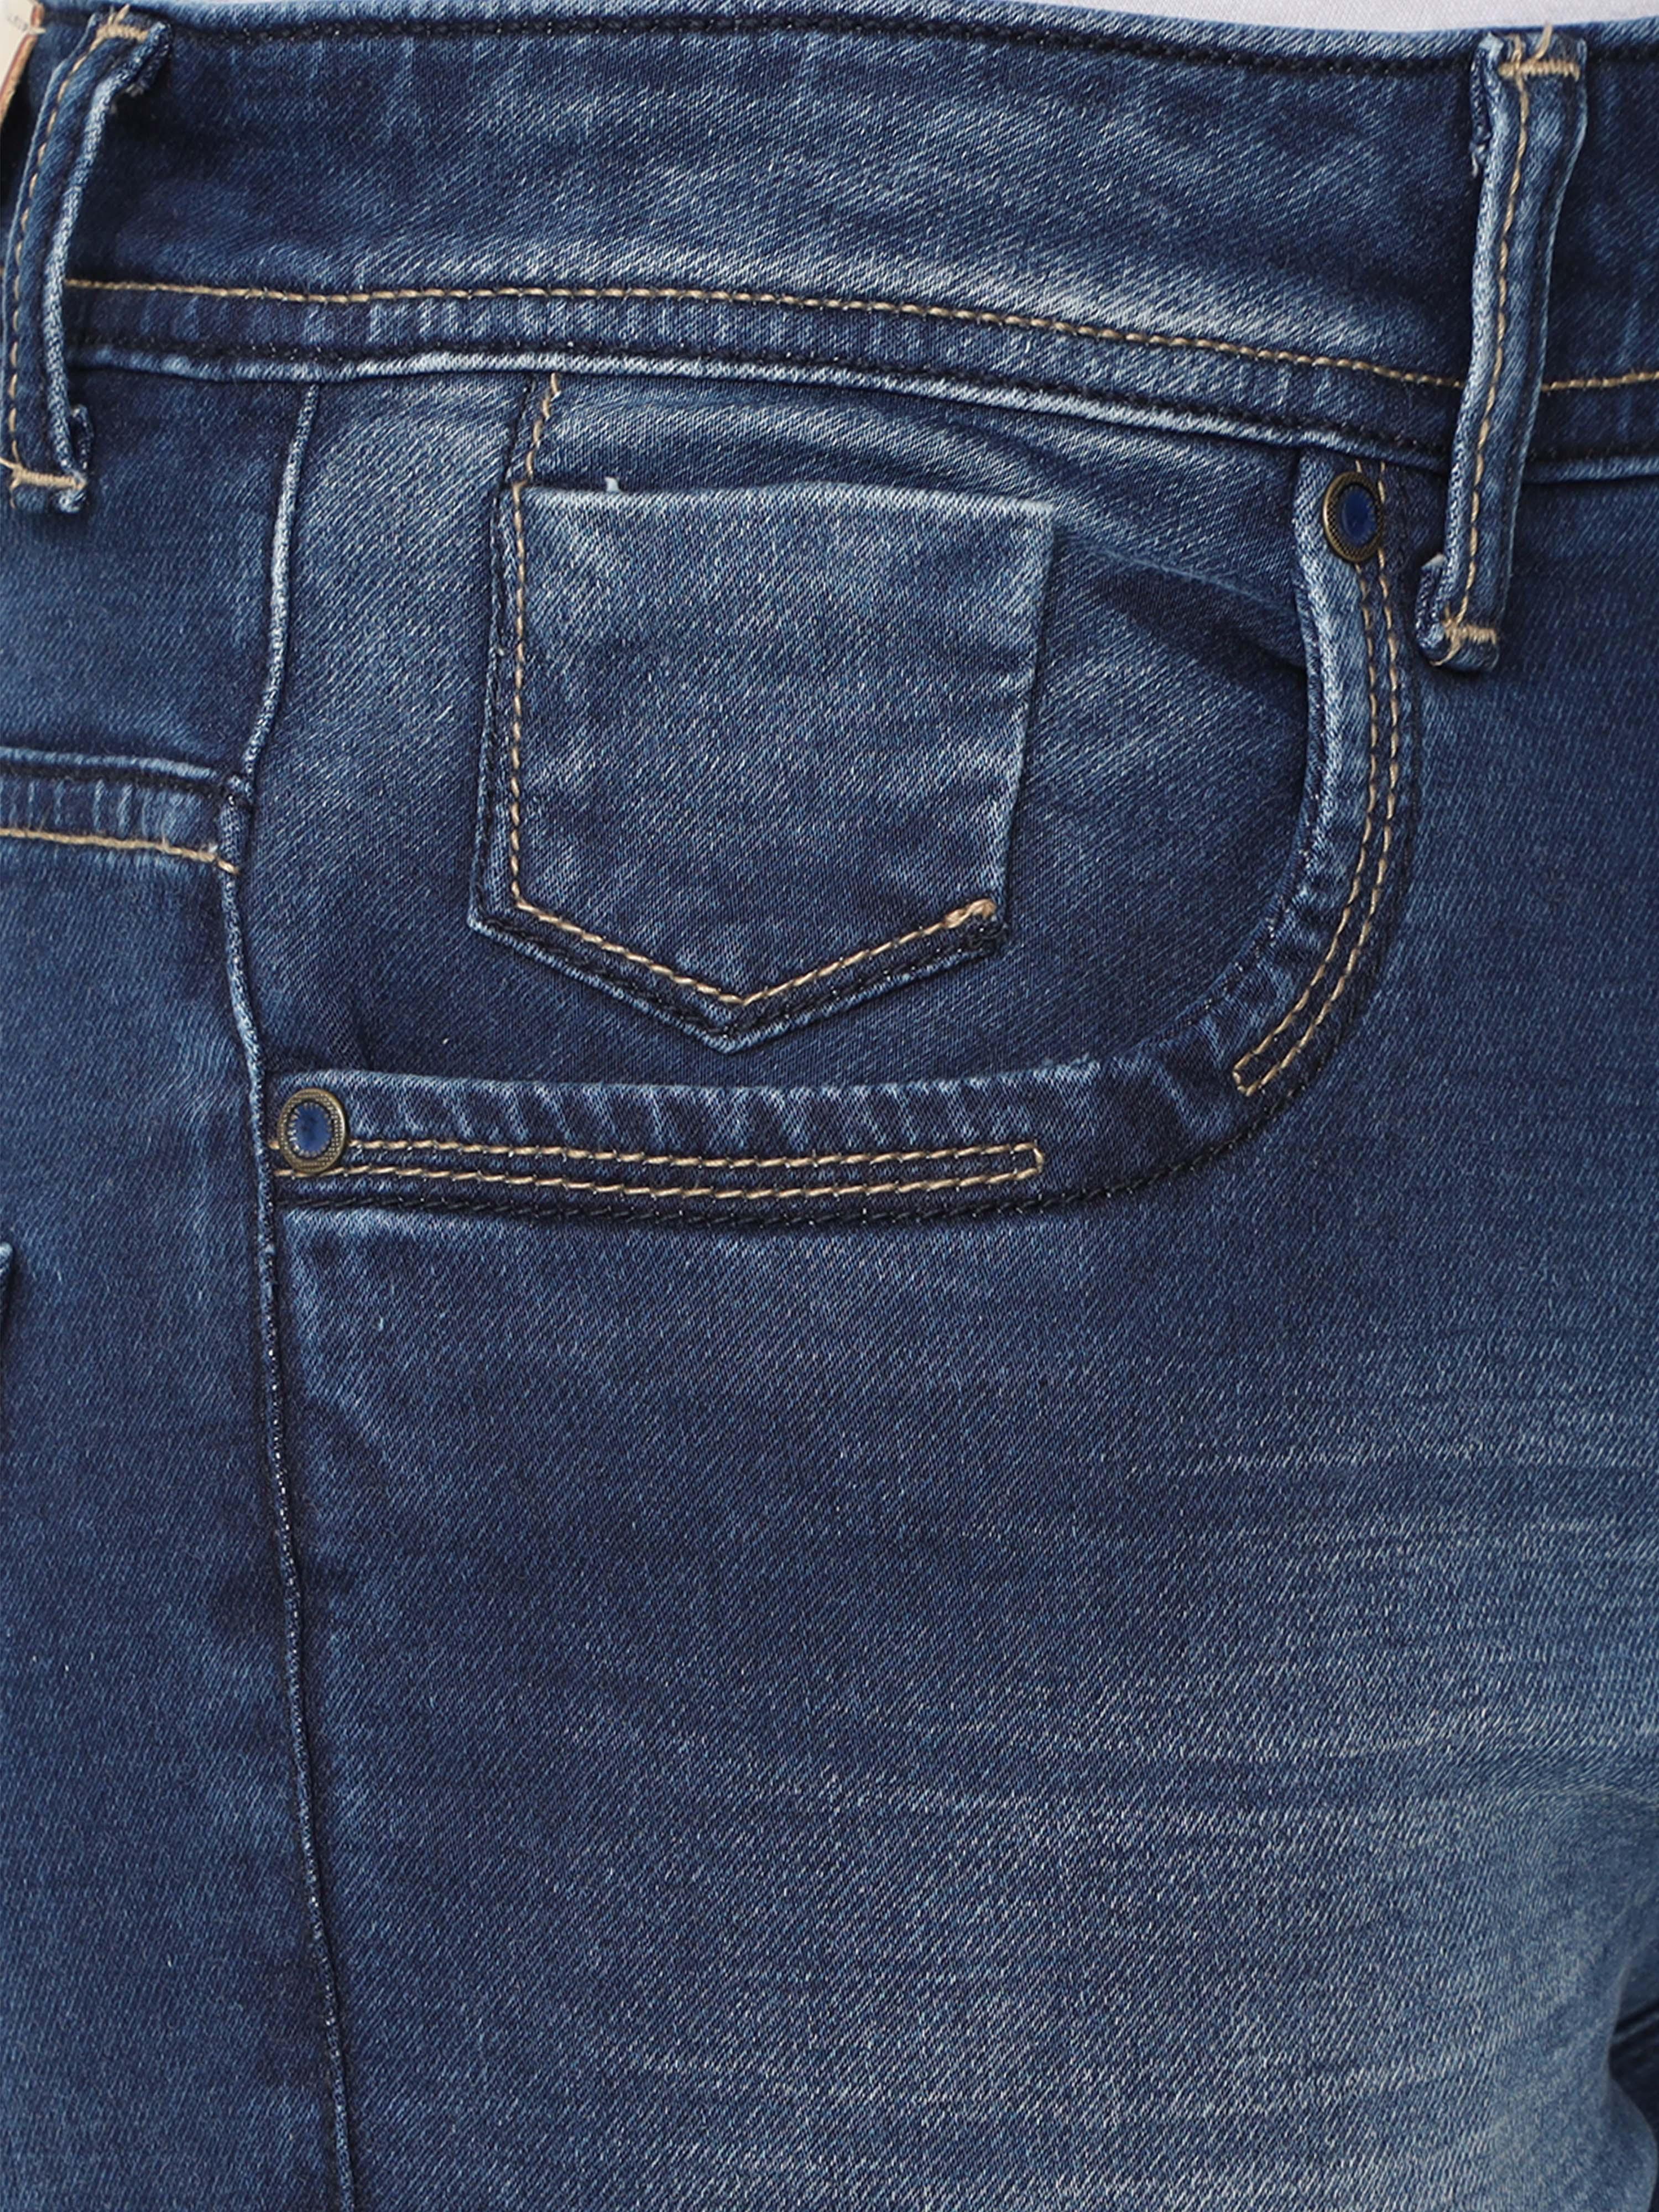 Men's Slim Fit Jeans _ Blue - Triggerjeans